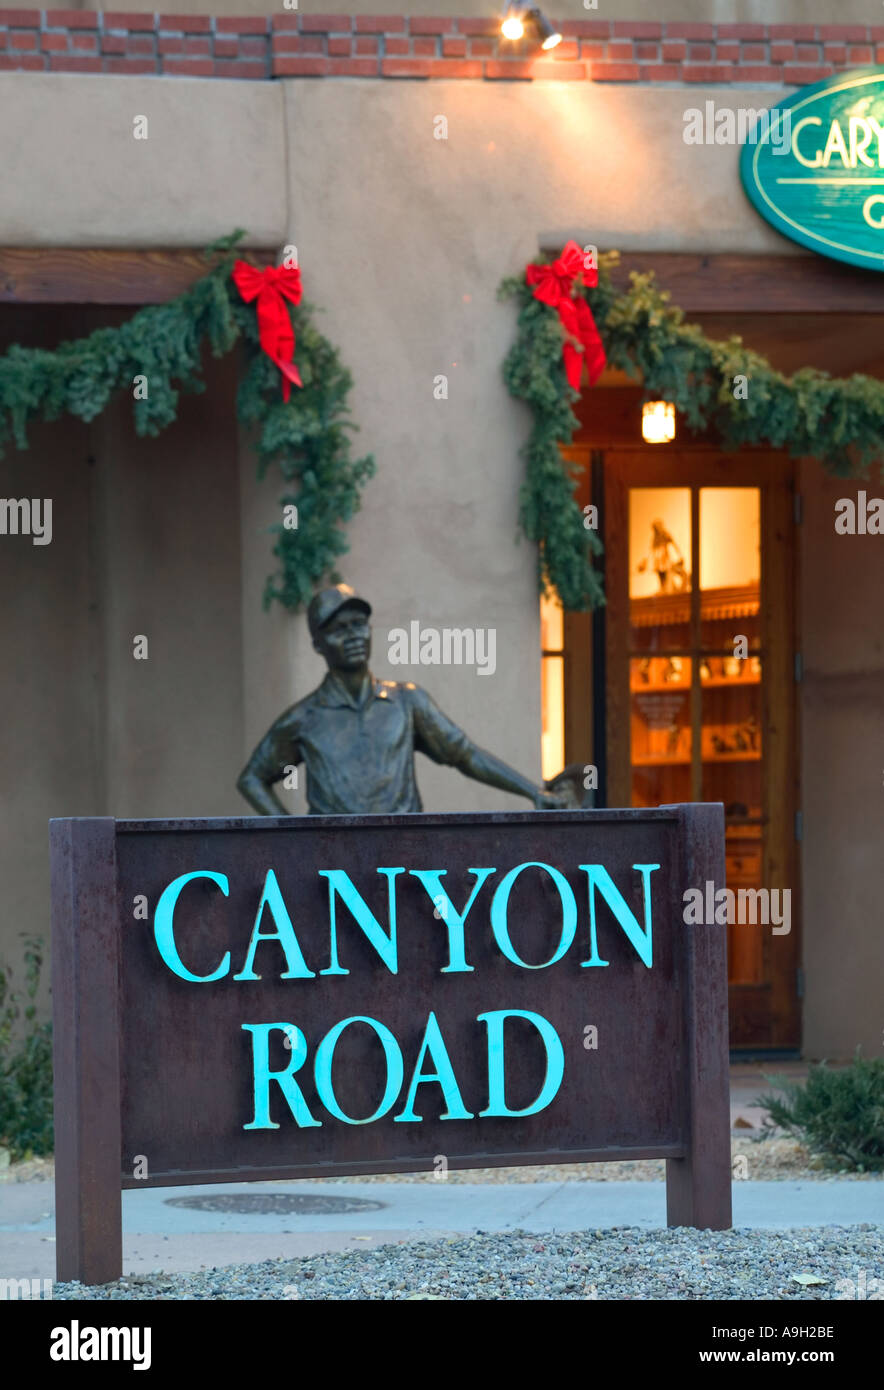 Canyon Road Gallery, Santa Fe, New Mexico, USA Banque D'Images